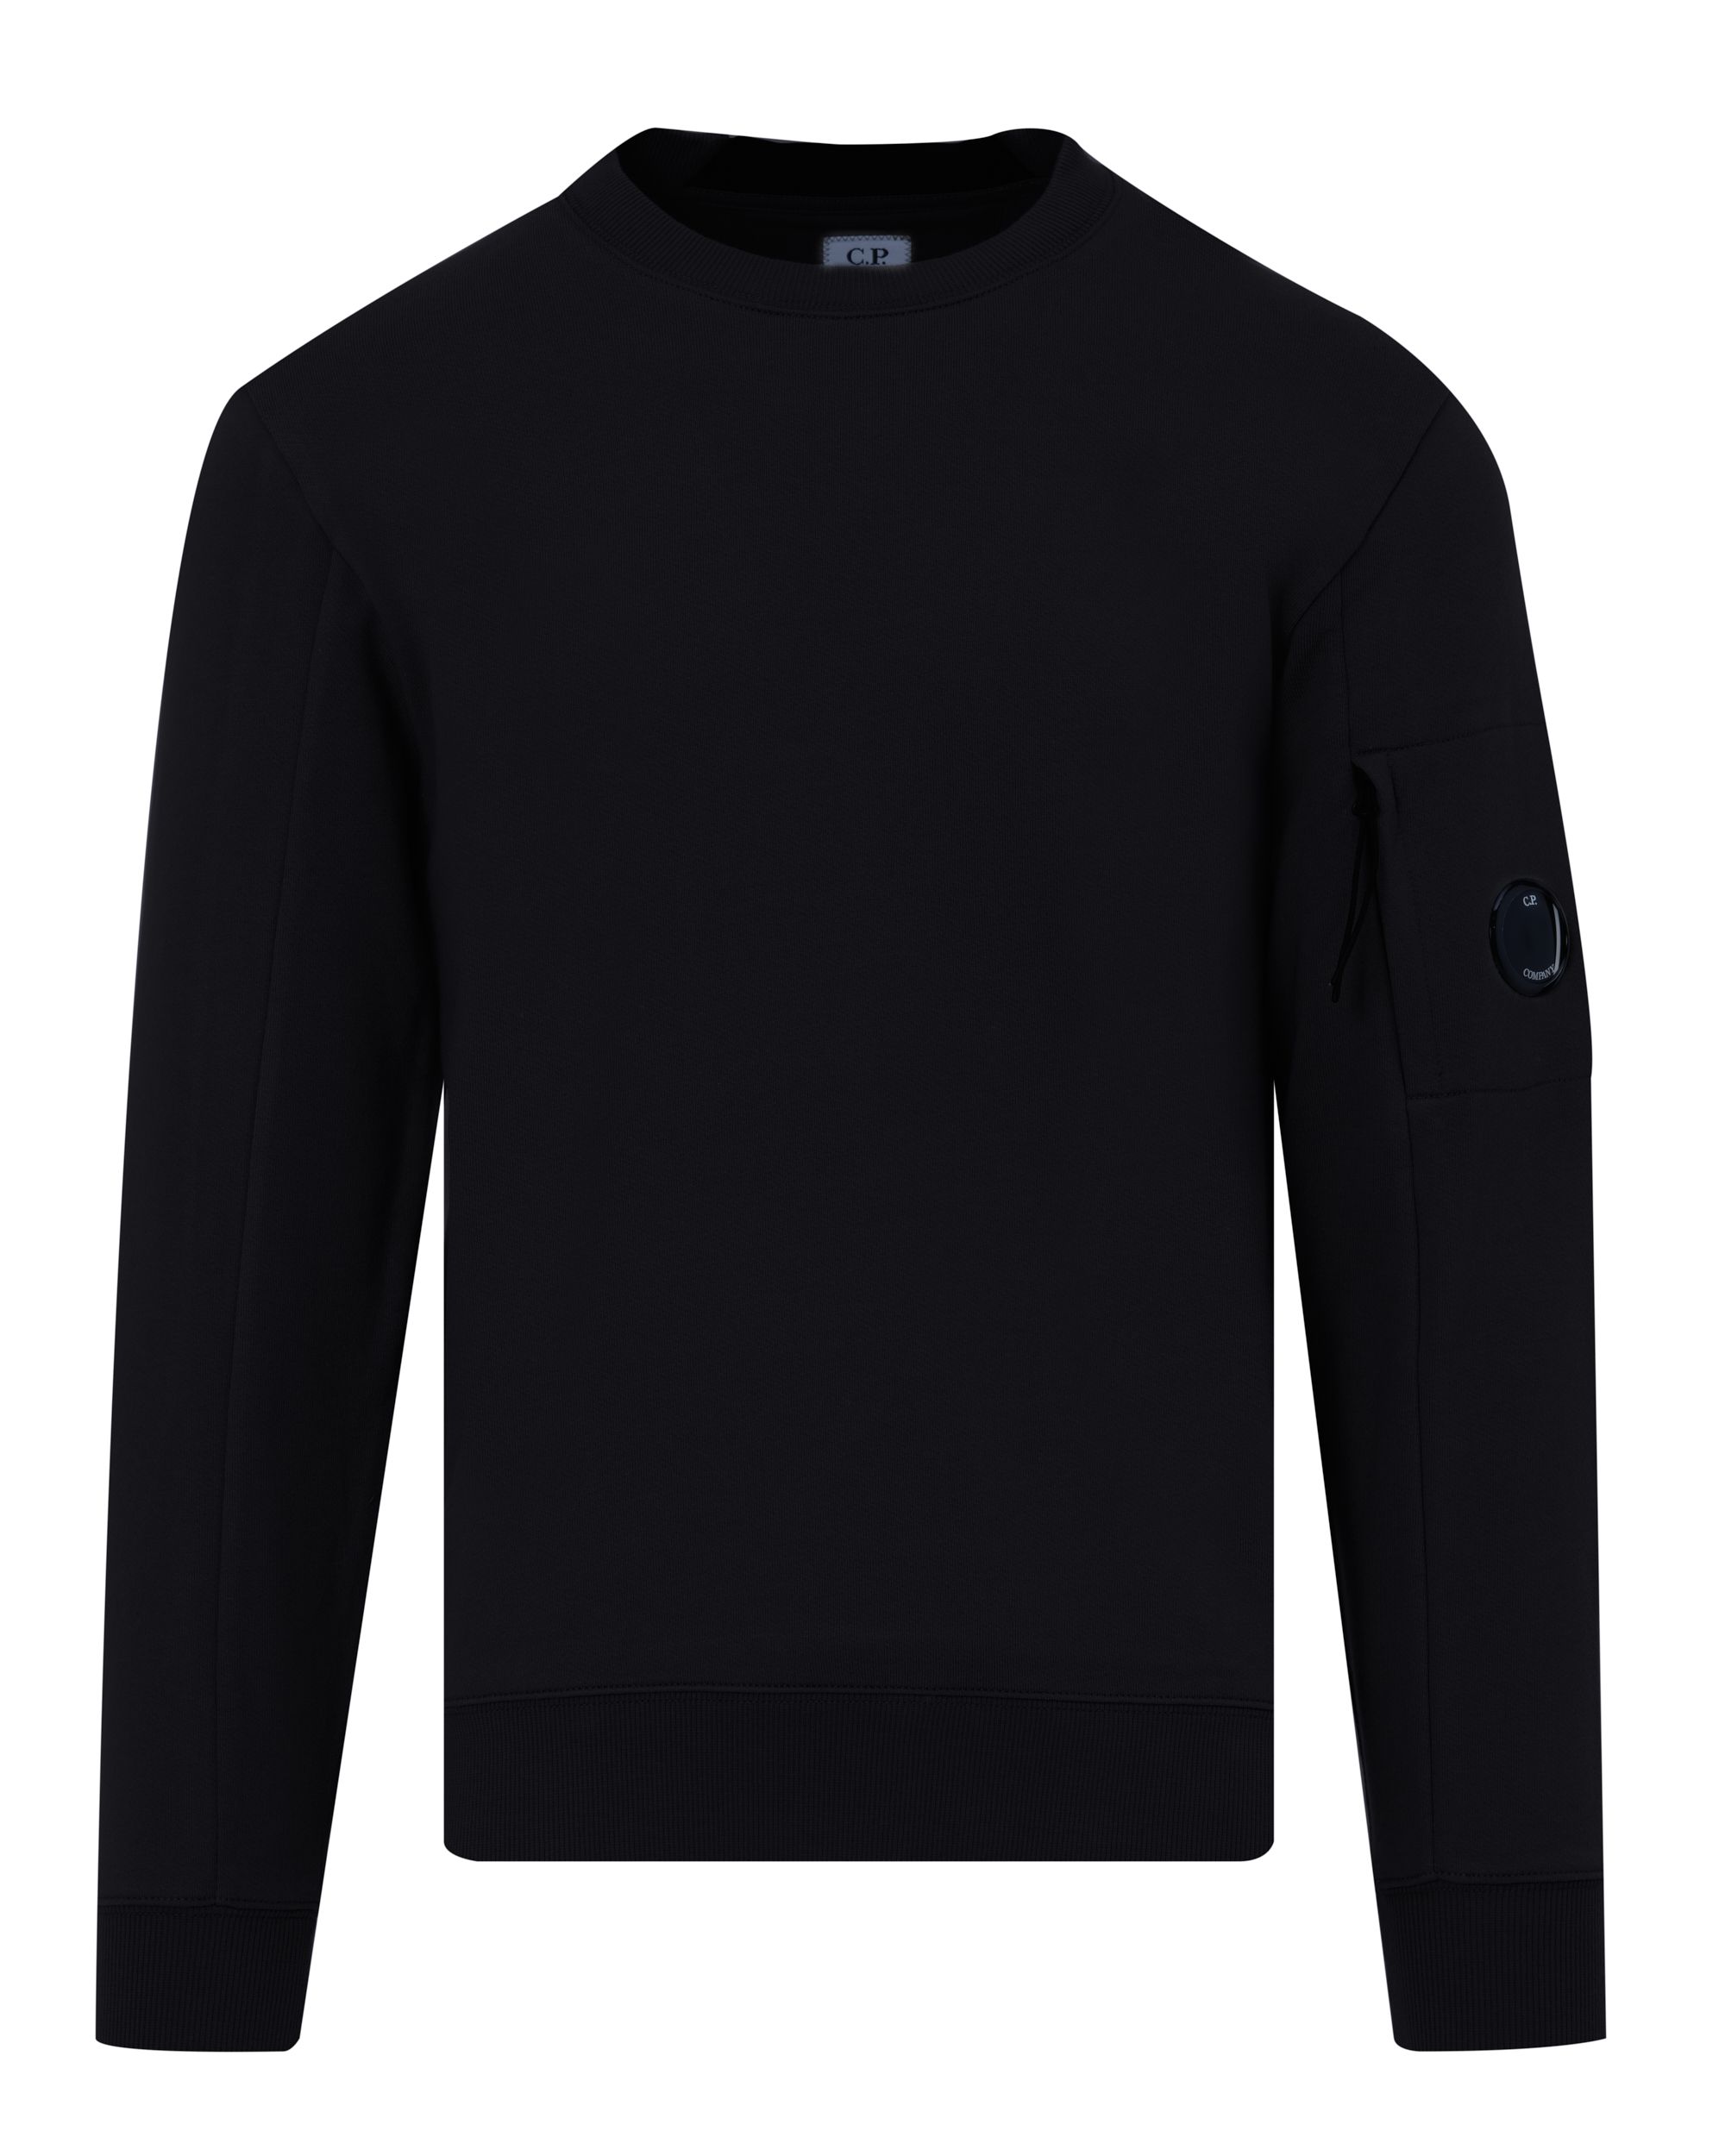 C.P Company Sweater Zwart 082130-001-L